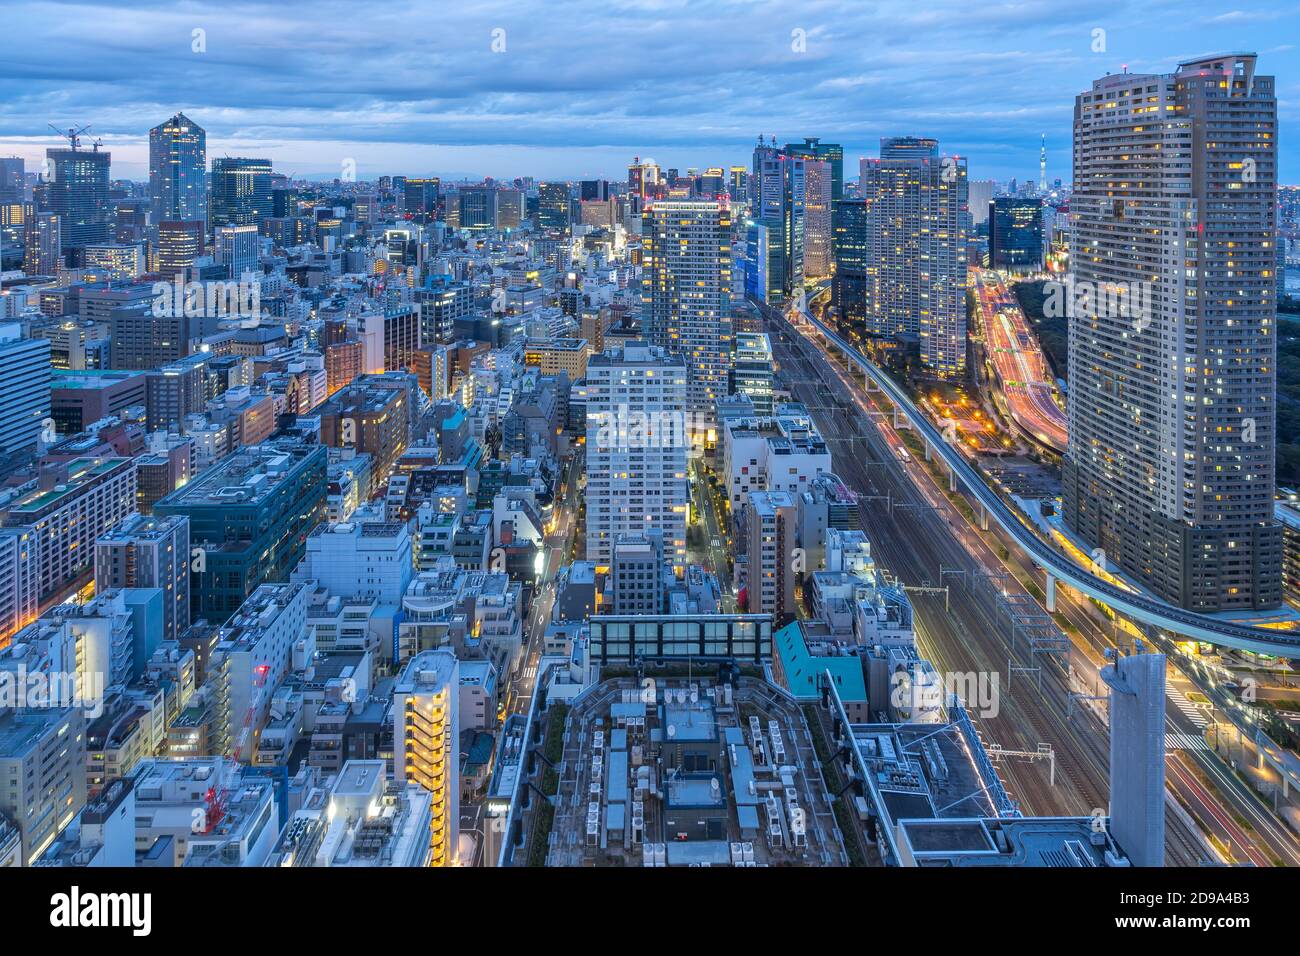 Tokyo city skyline with landmark buildings in Tokyo, Japan. Stock Photo